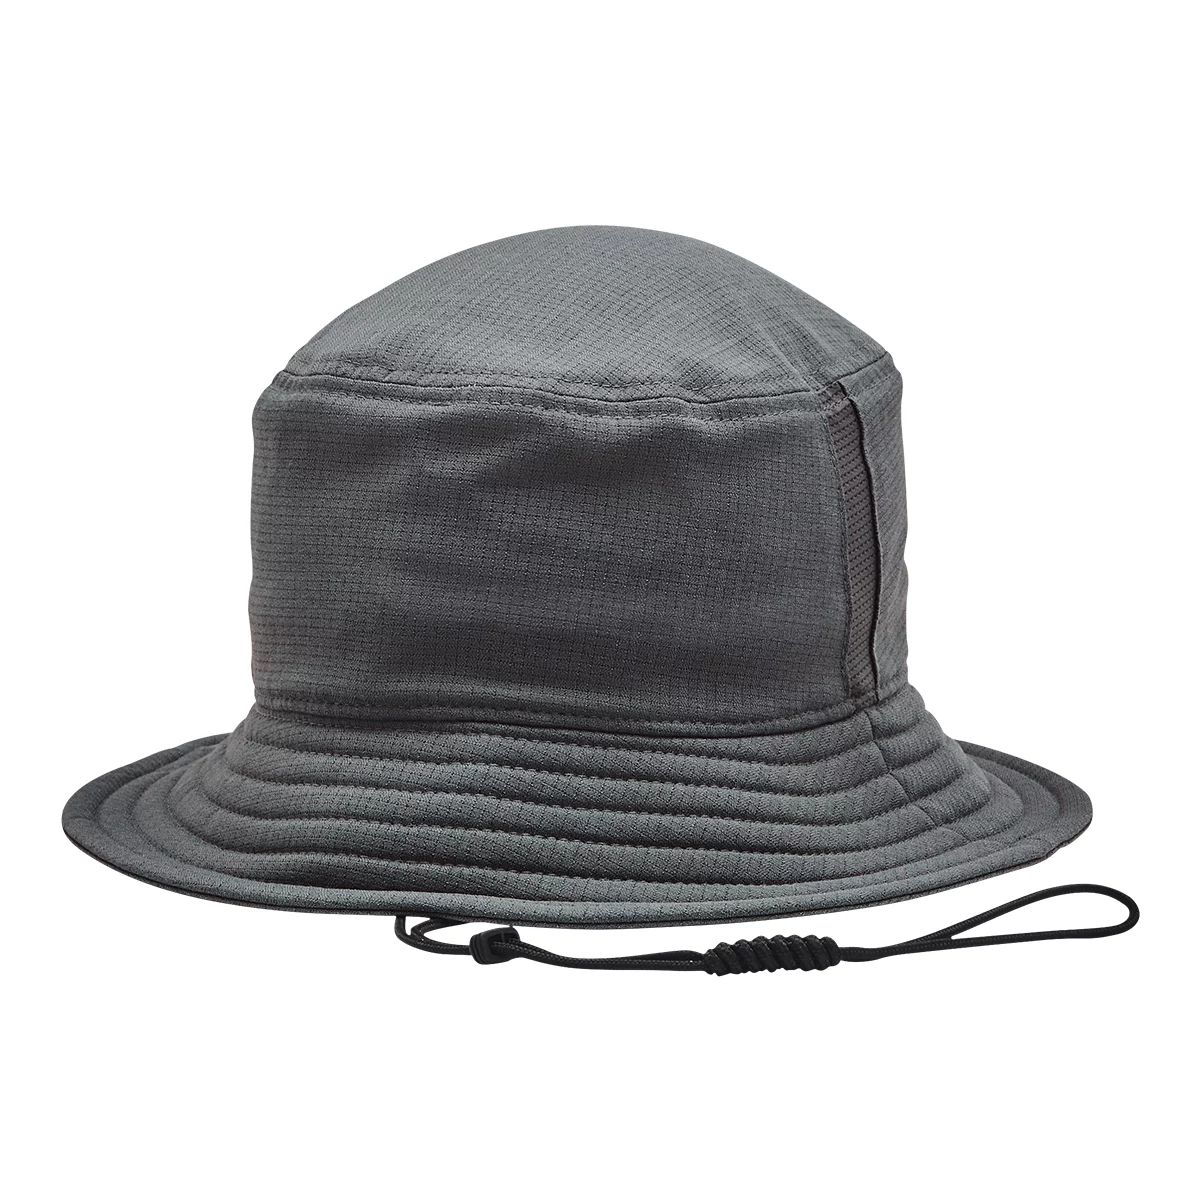 Under Armour Bucket Hats For Men